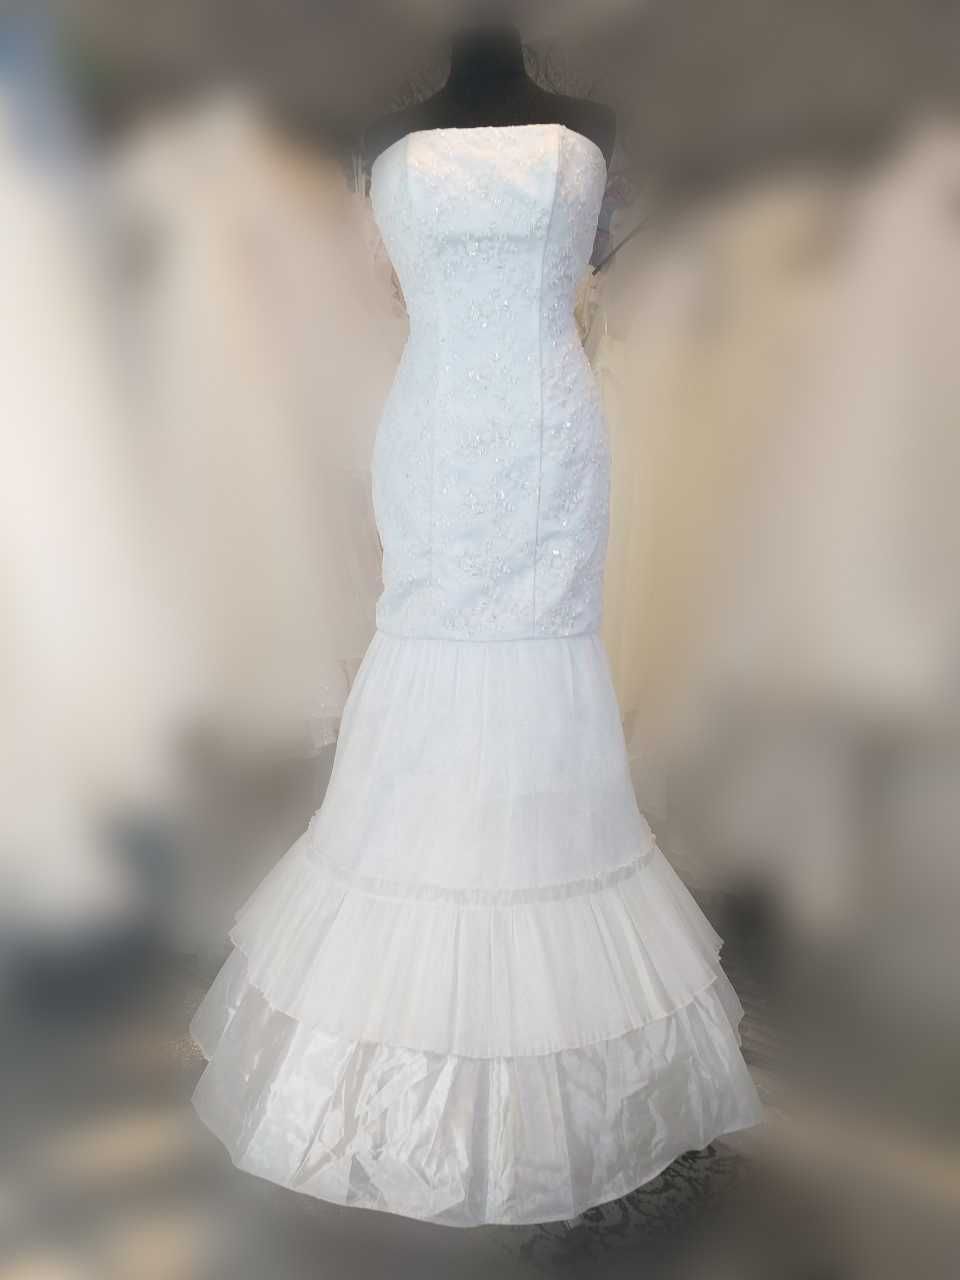 Нова весільна сукна 500грн